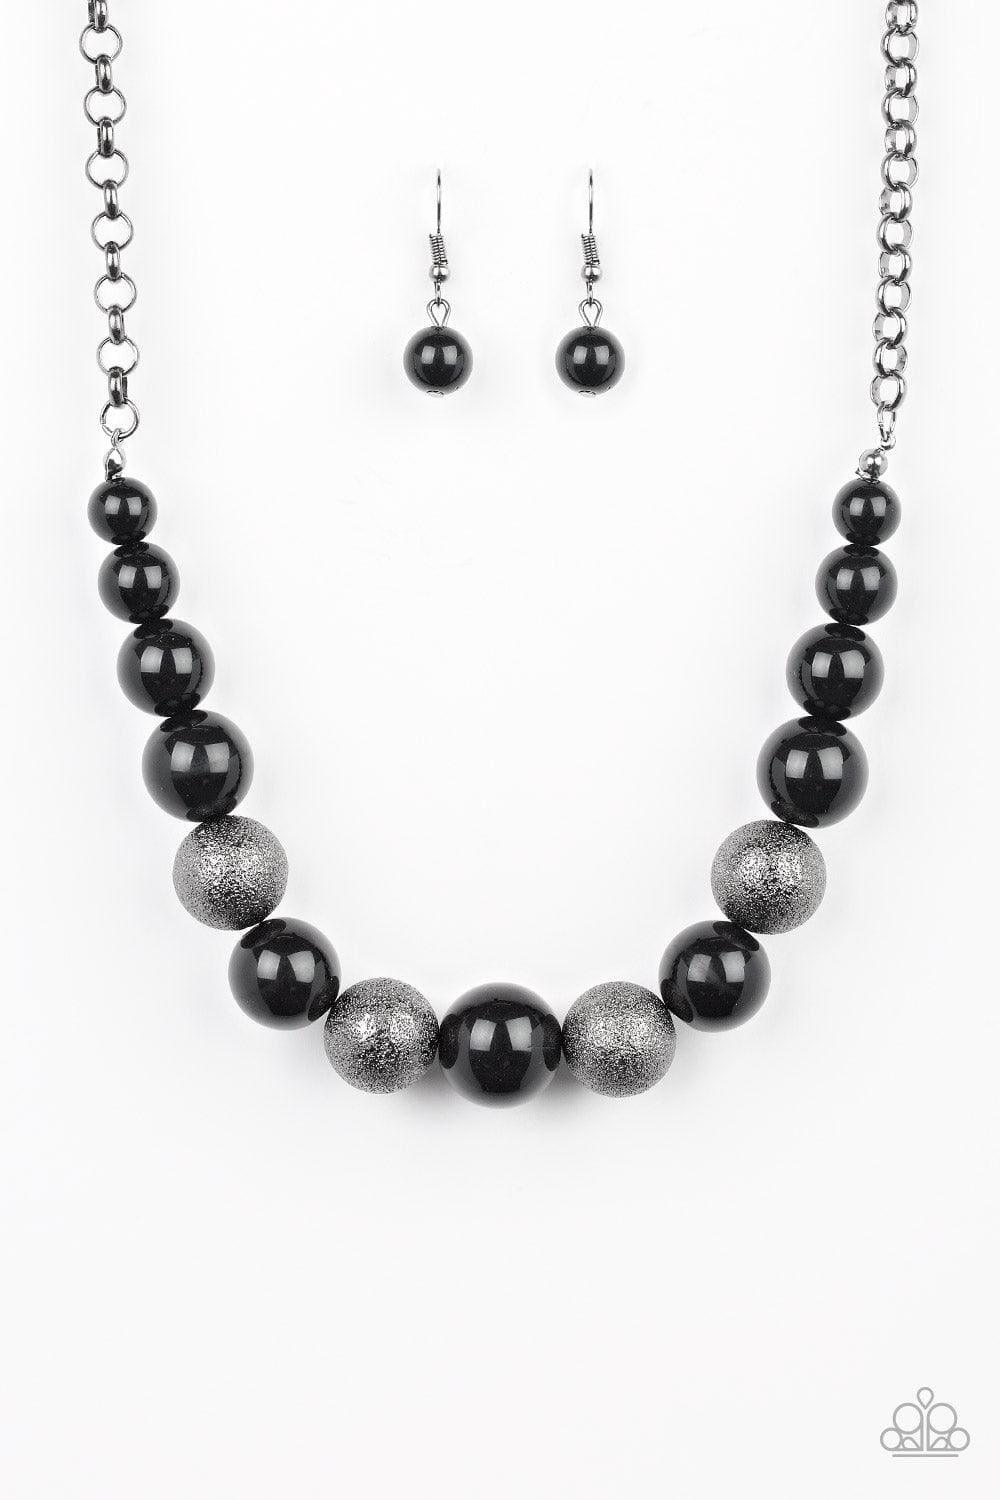 Paparazzi Accessories - Color Me Ceo - Black Necklace - Bling by JessieK